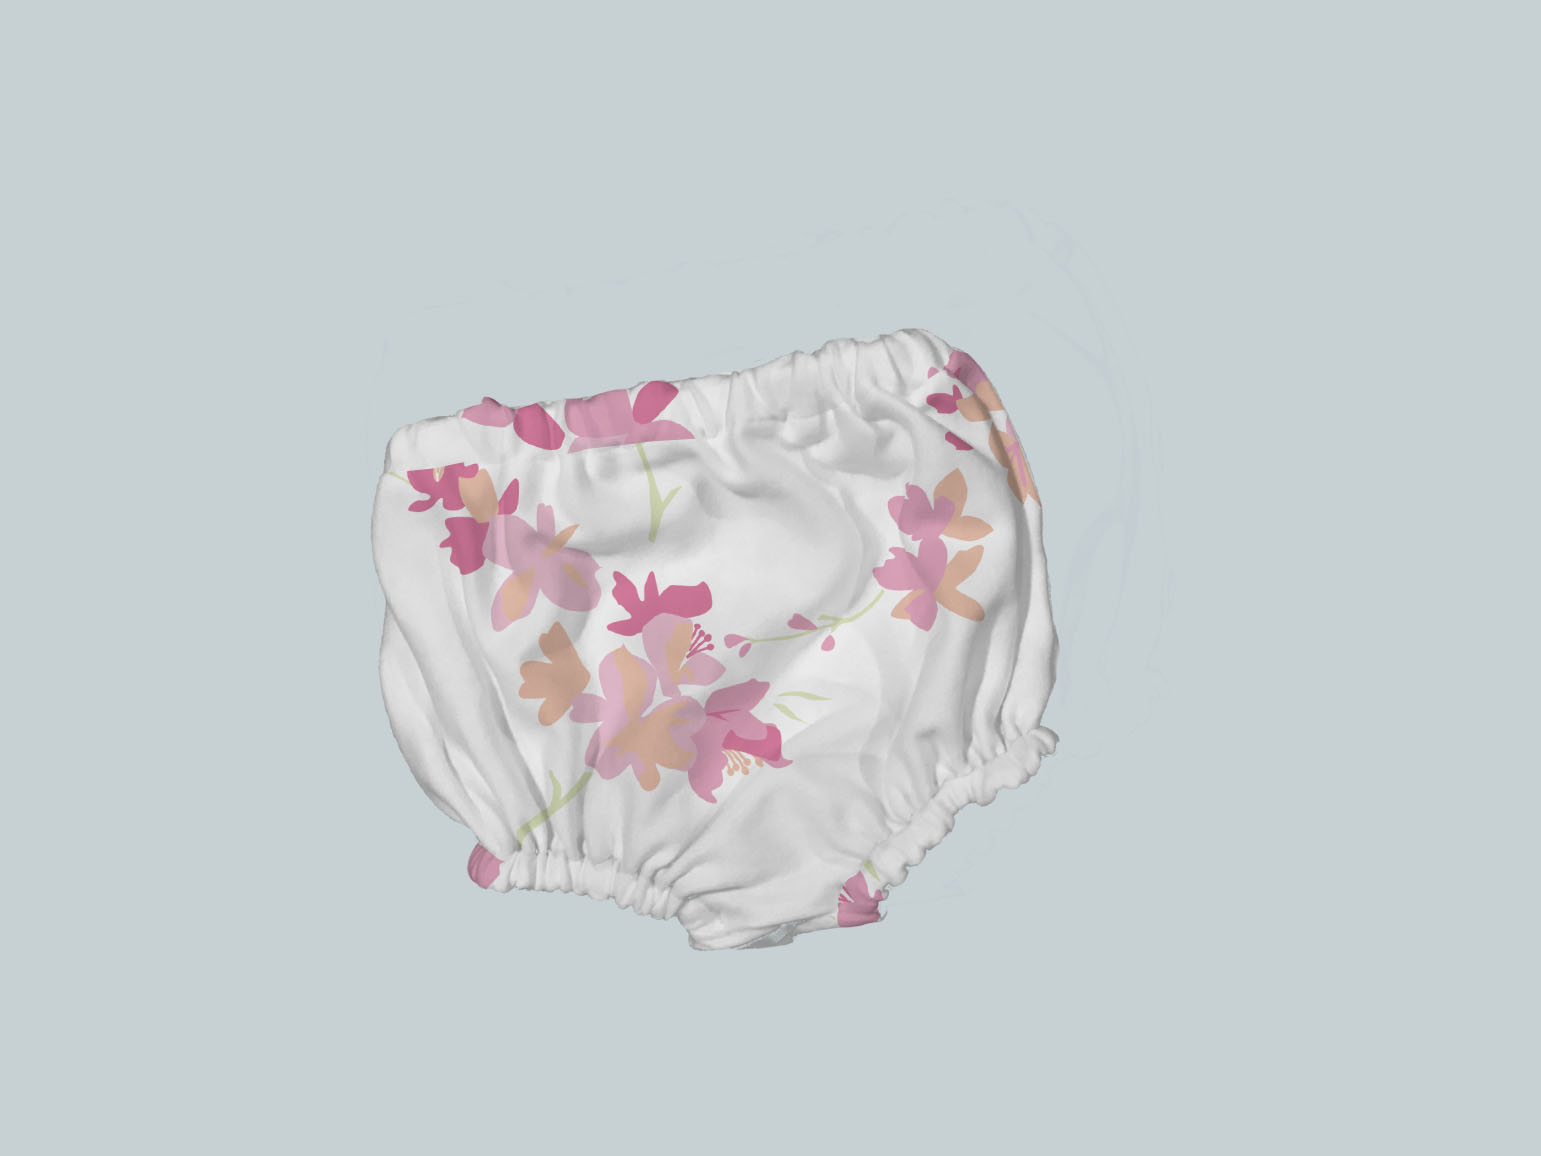 Bummies/Diaper Cover - Pretty in Pink